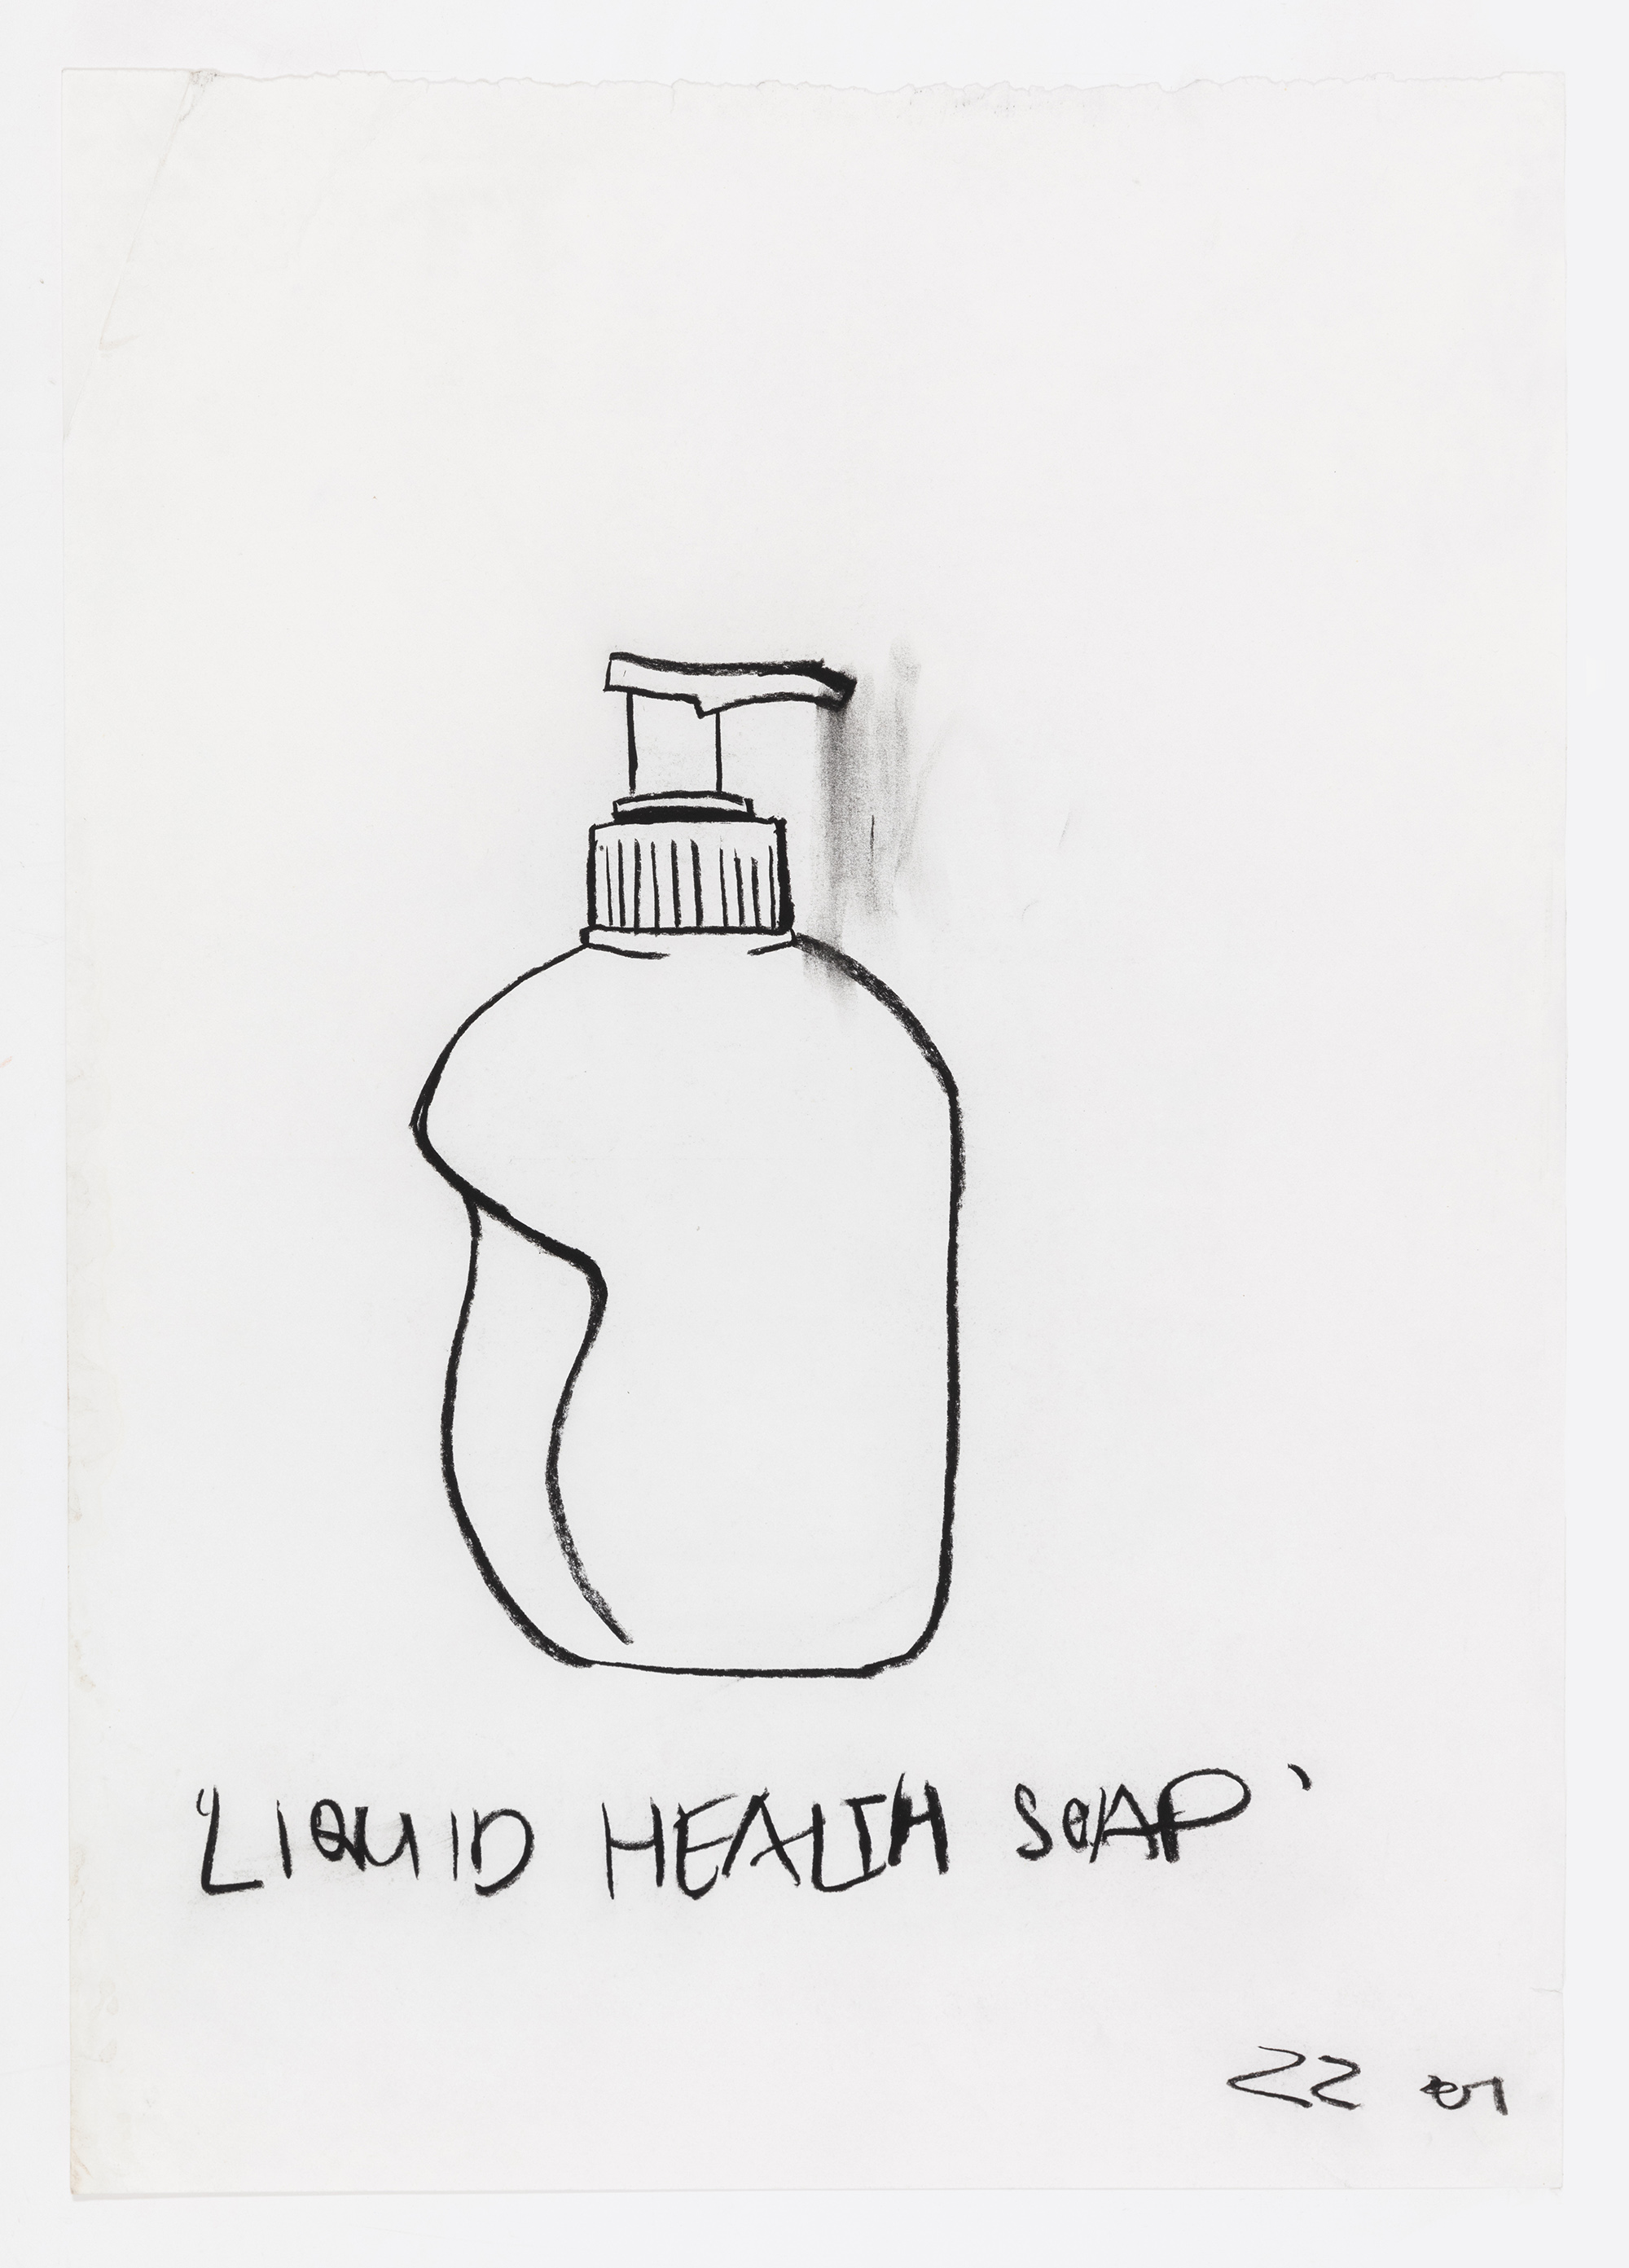  - LIQUID HEALTH SOAP, 2001